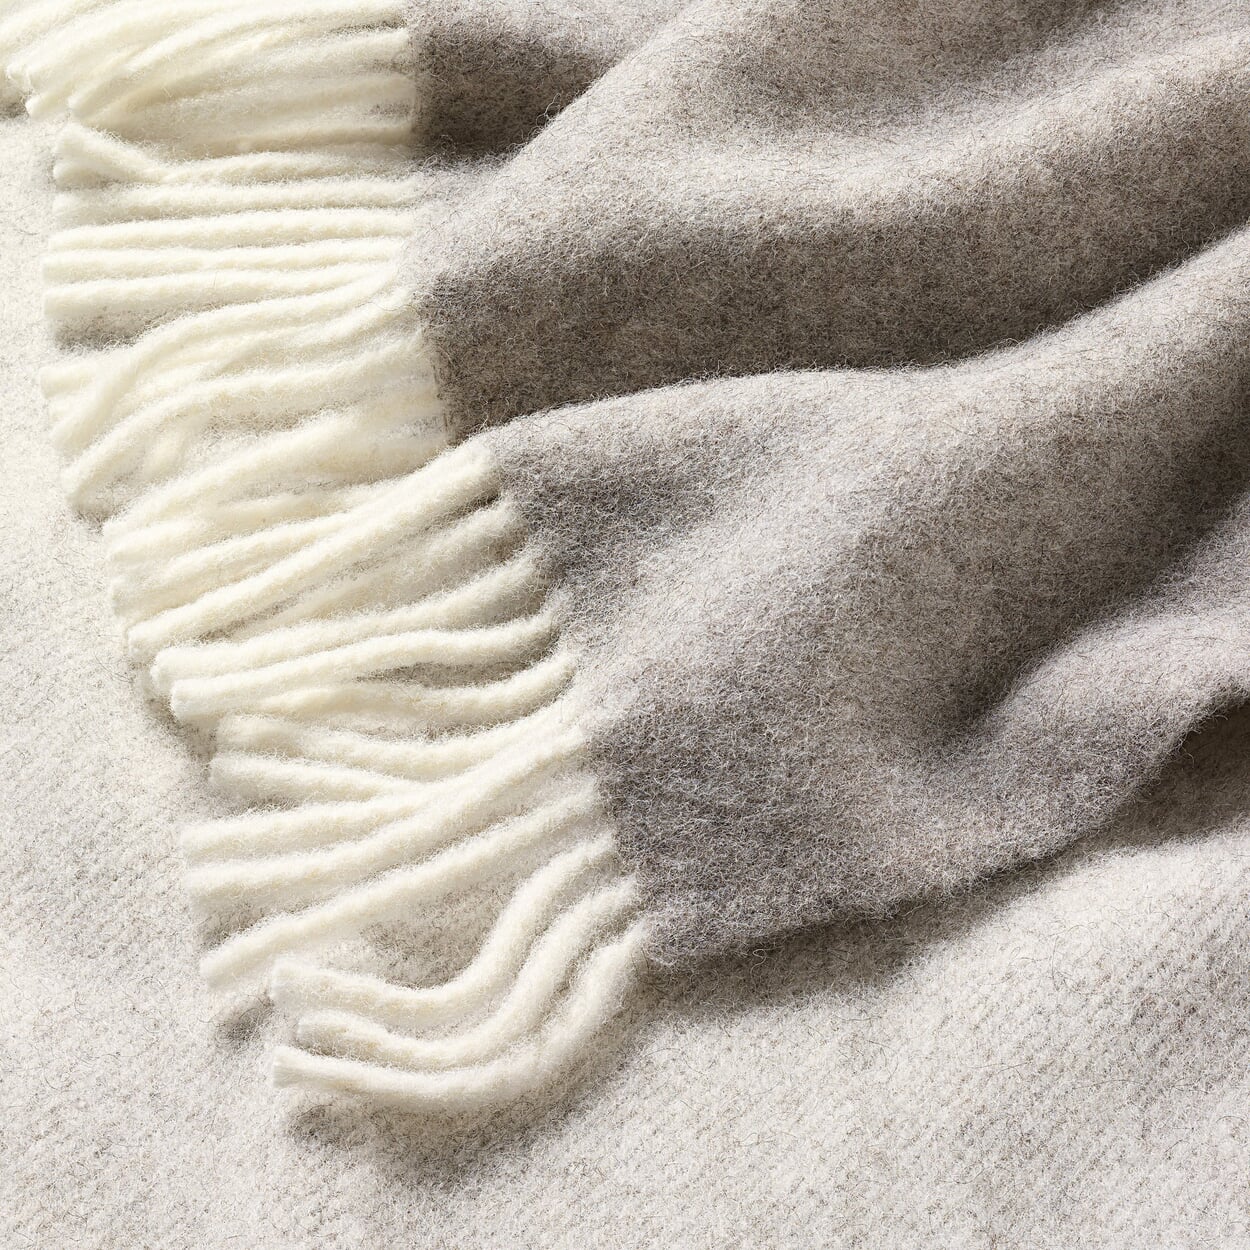 Pure new wool blanket merino wool